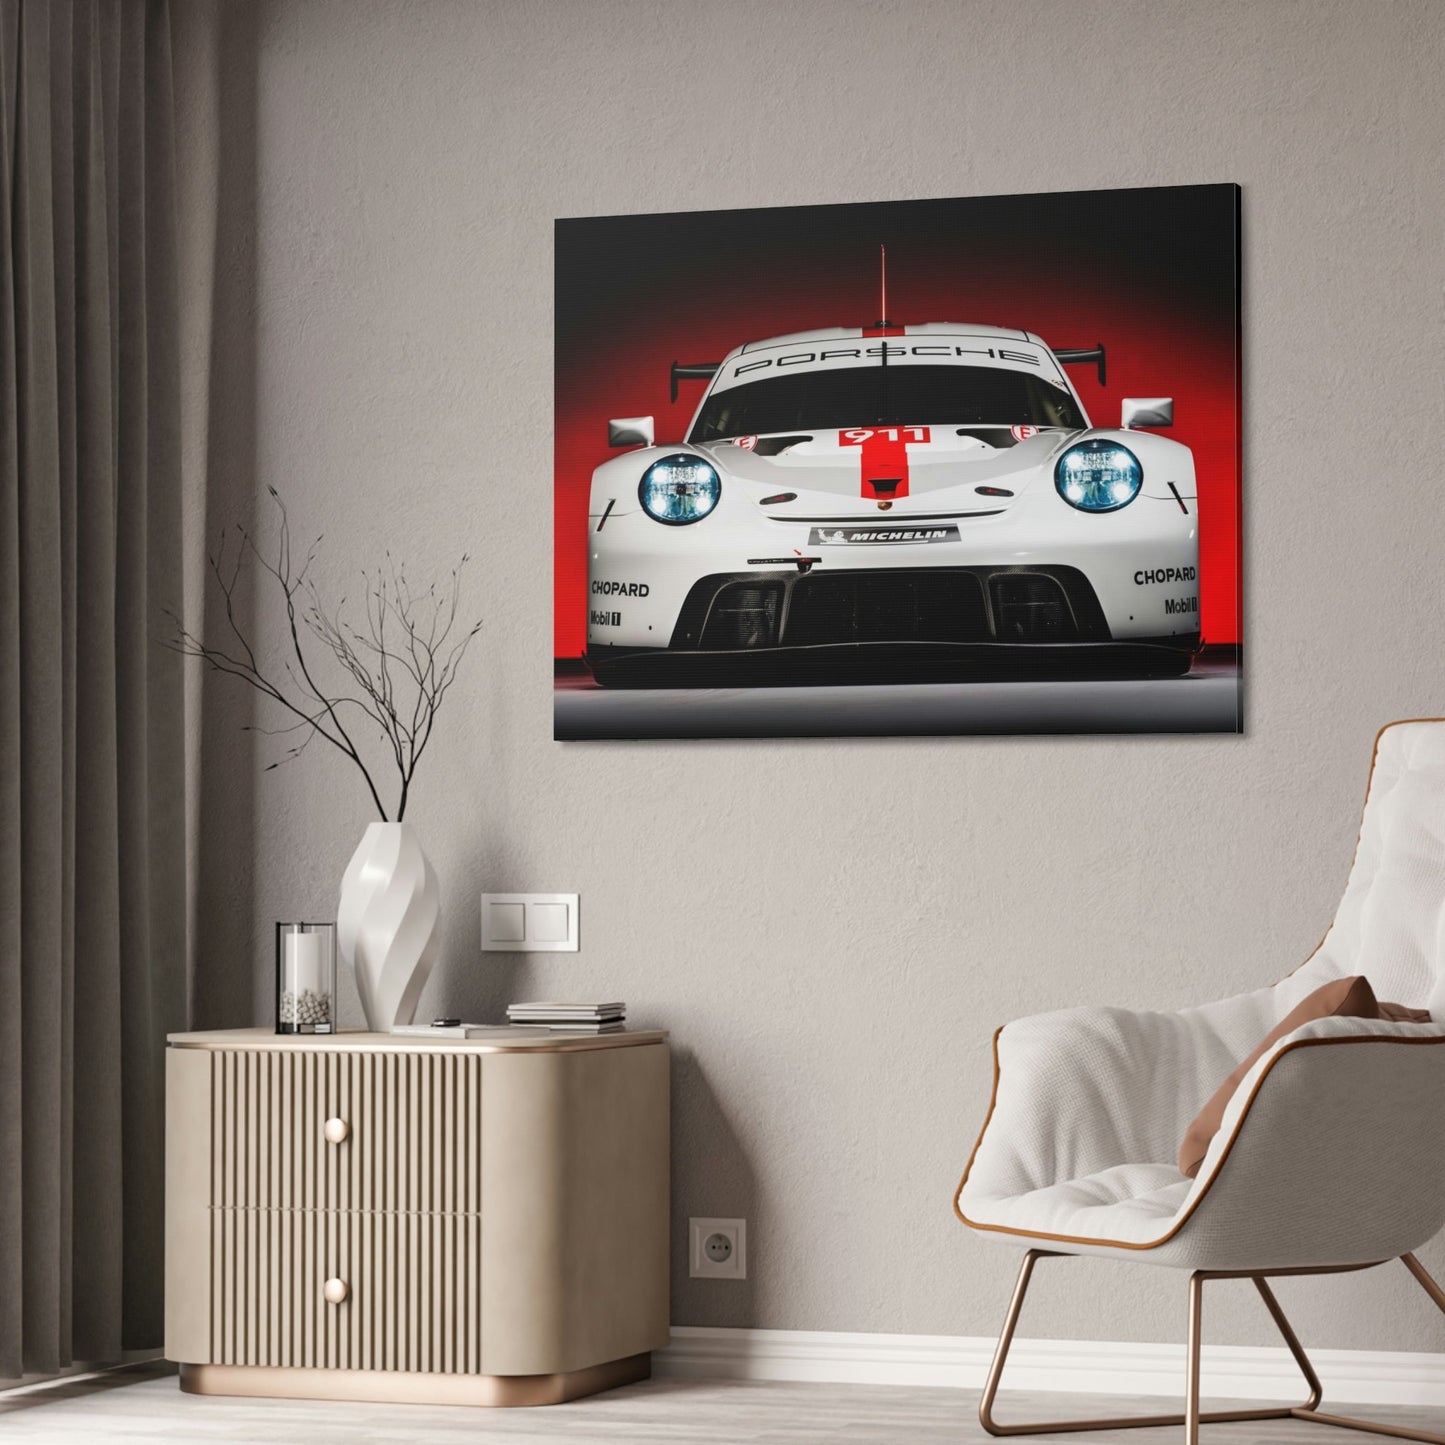 The Porsche Lifestyle on Canvas: High-Quality Art Prints for Fans